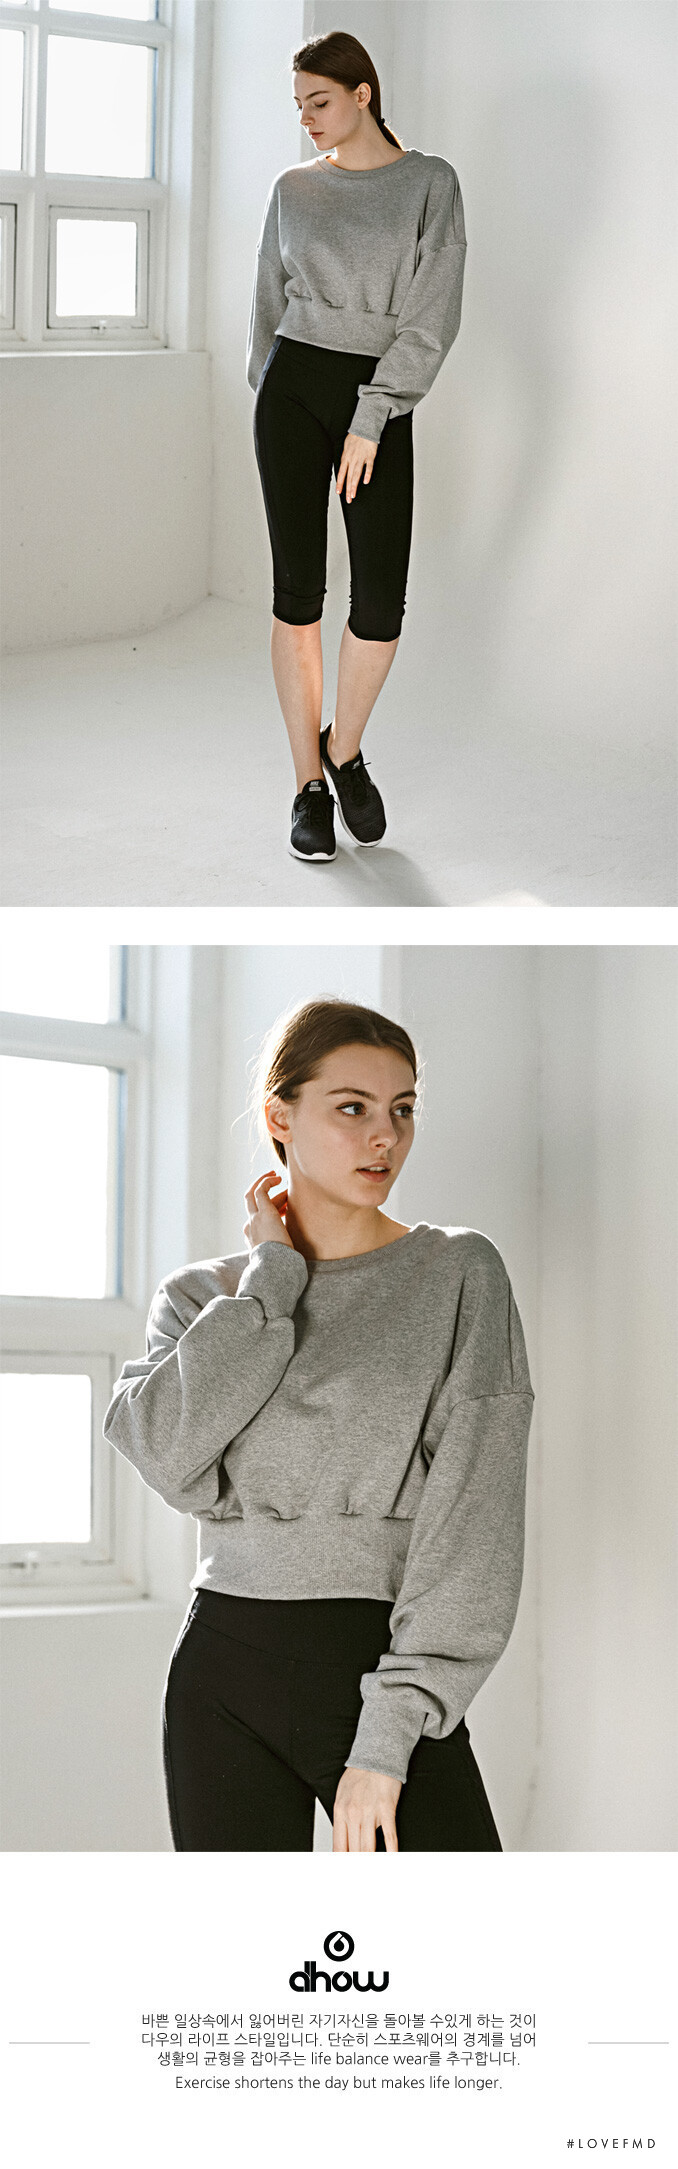 Marina Bondarko featured in  the Dhow catalogue for Autumn/Winter 2019